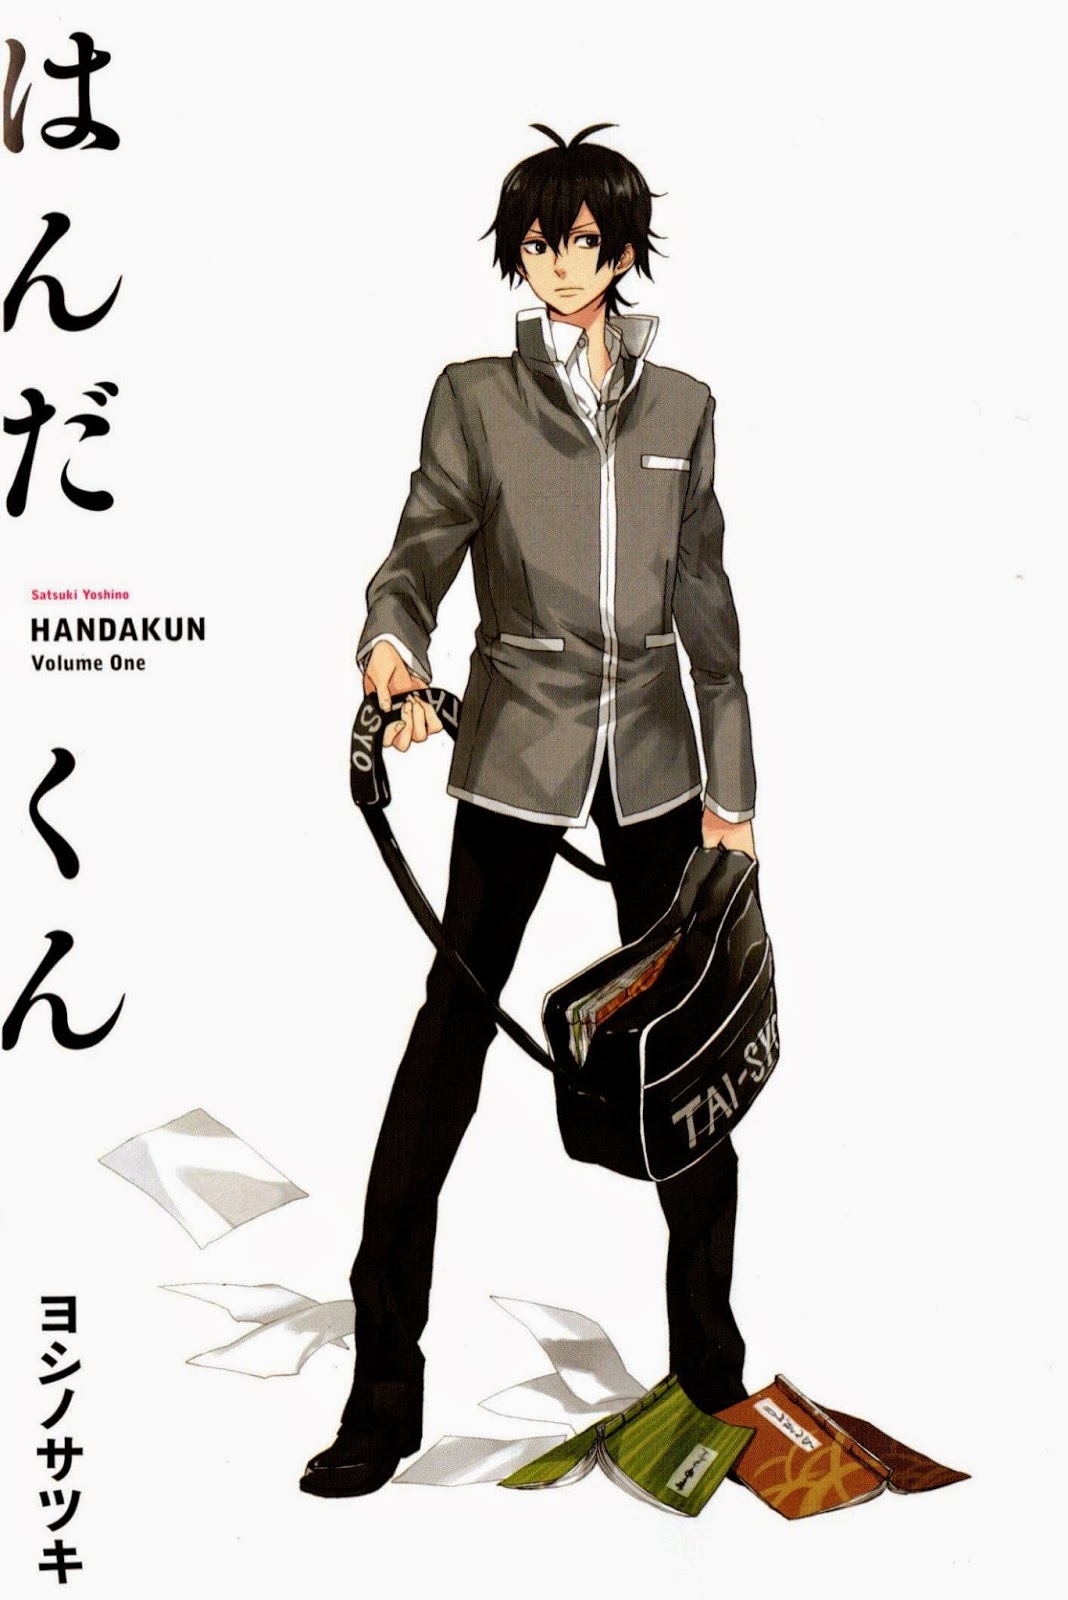 Anime Like Handa-kun